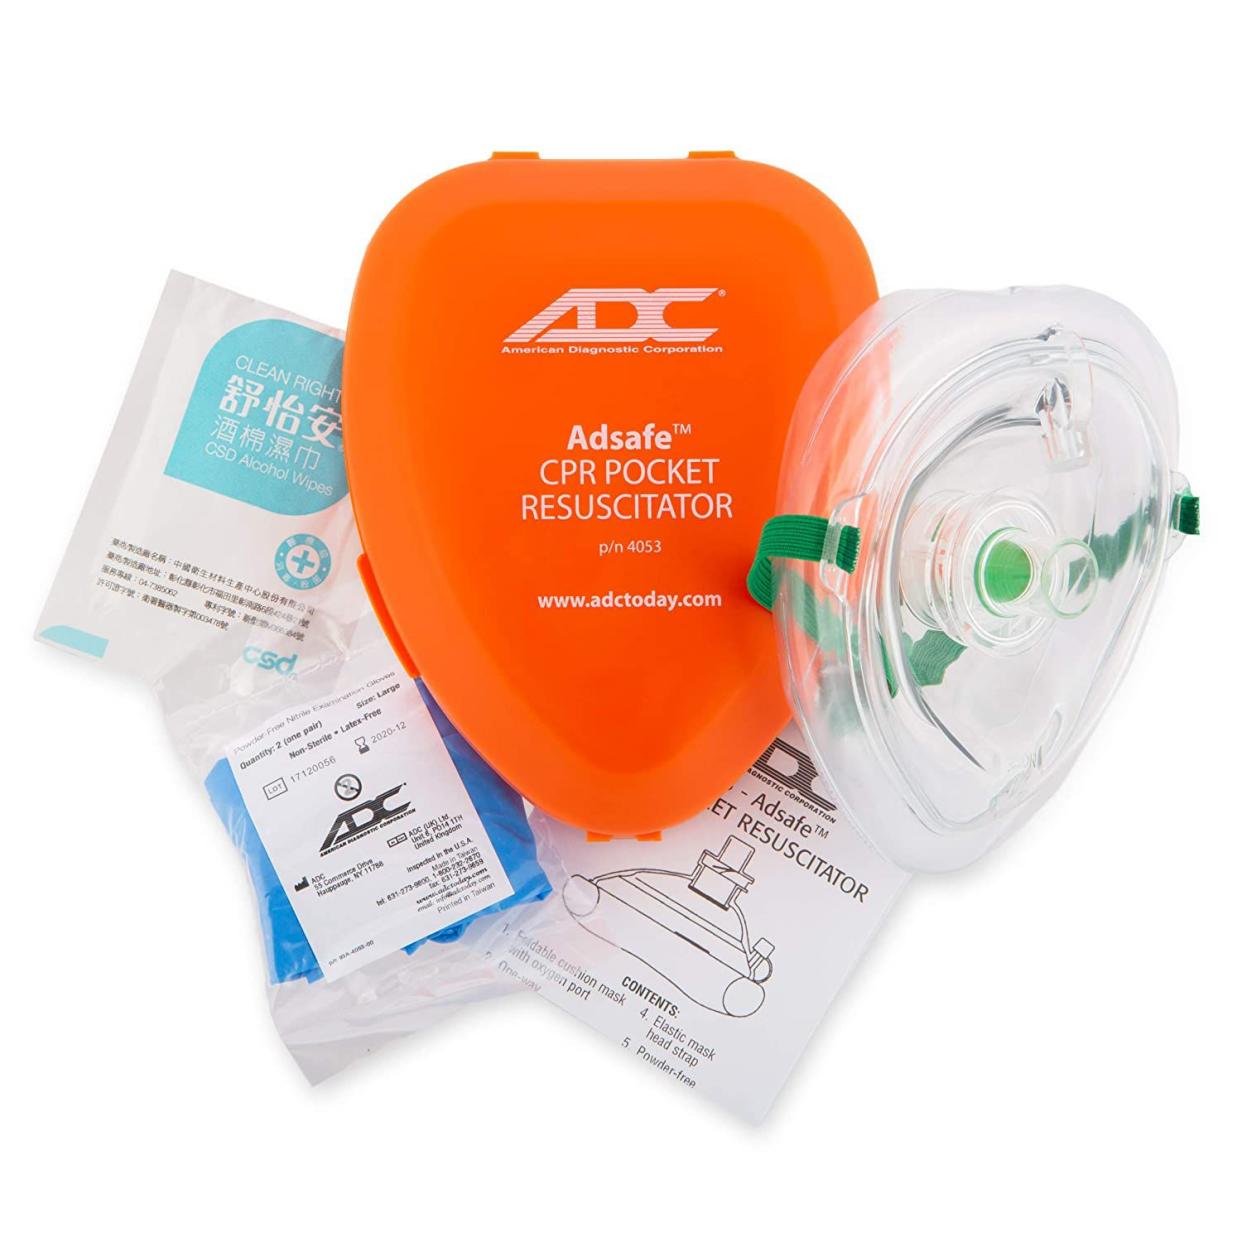 American Diagnostic Adsafe CPR Pocket Resuscitator